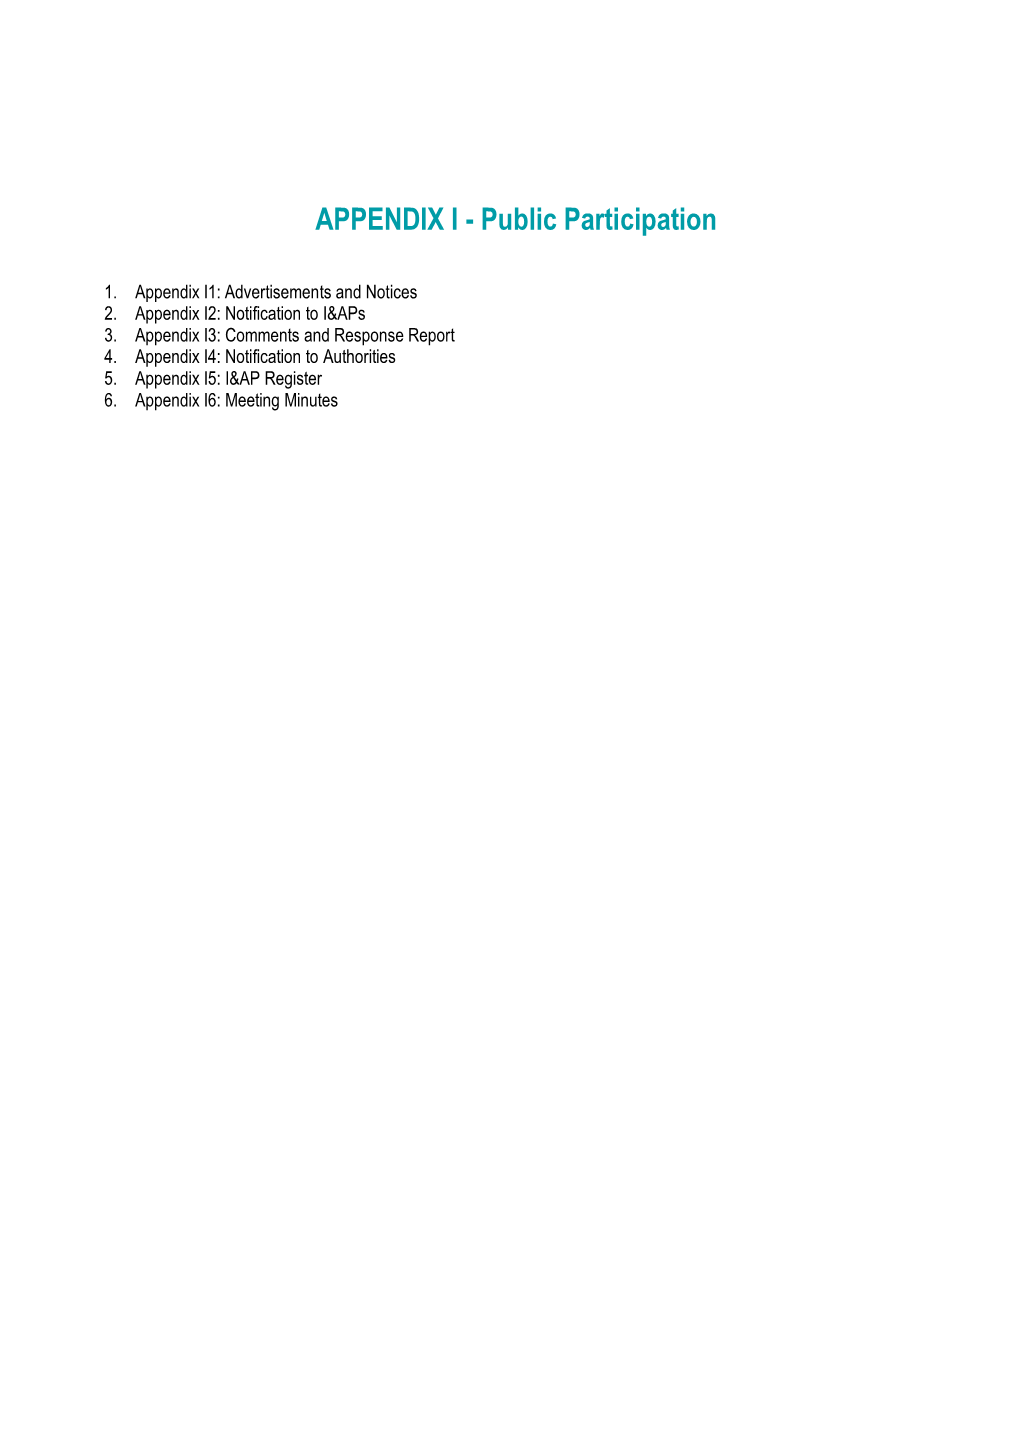 10 Appendix I: Public Participation